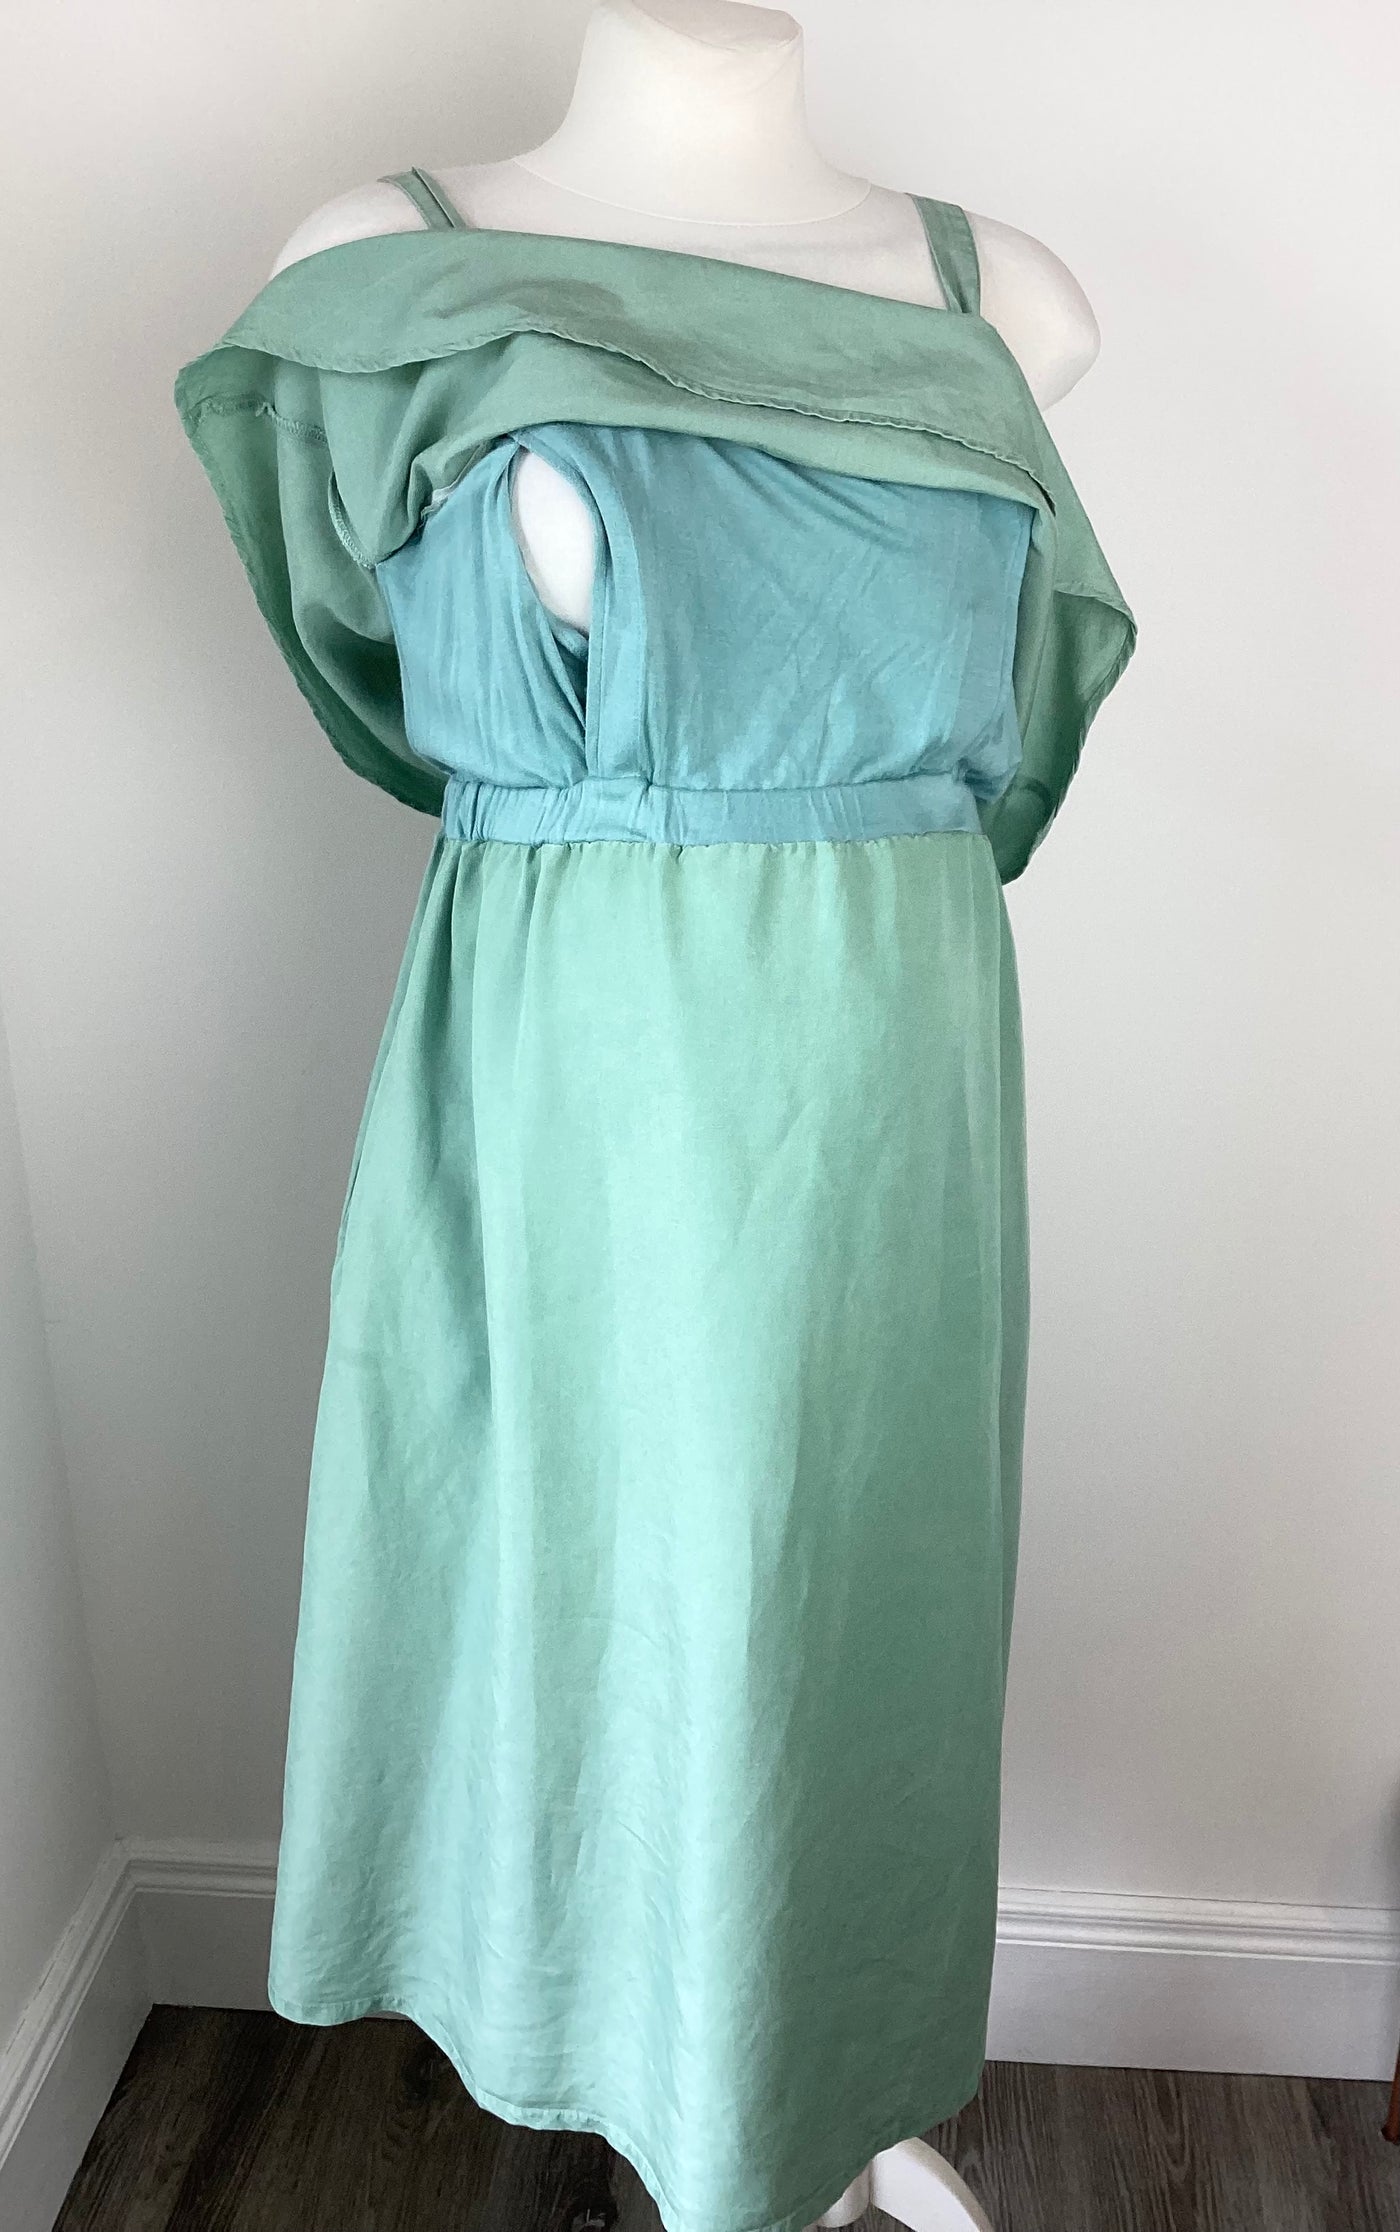 Jojo Maman Bebe sage green double layer maternity & nursing dress with pockets - Size S (approx UK 8/10)